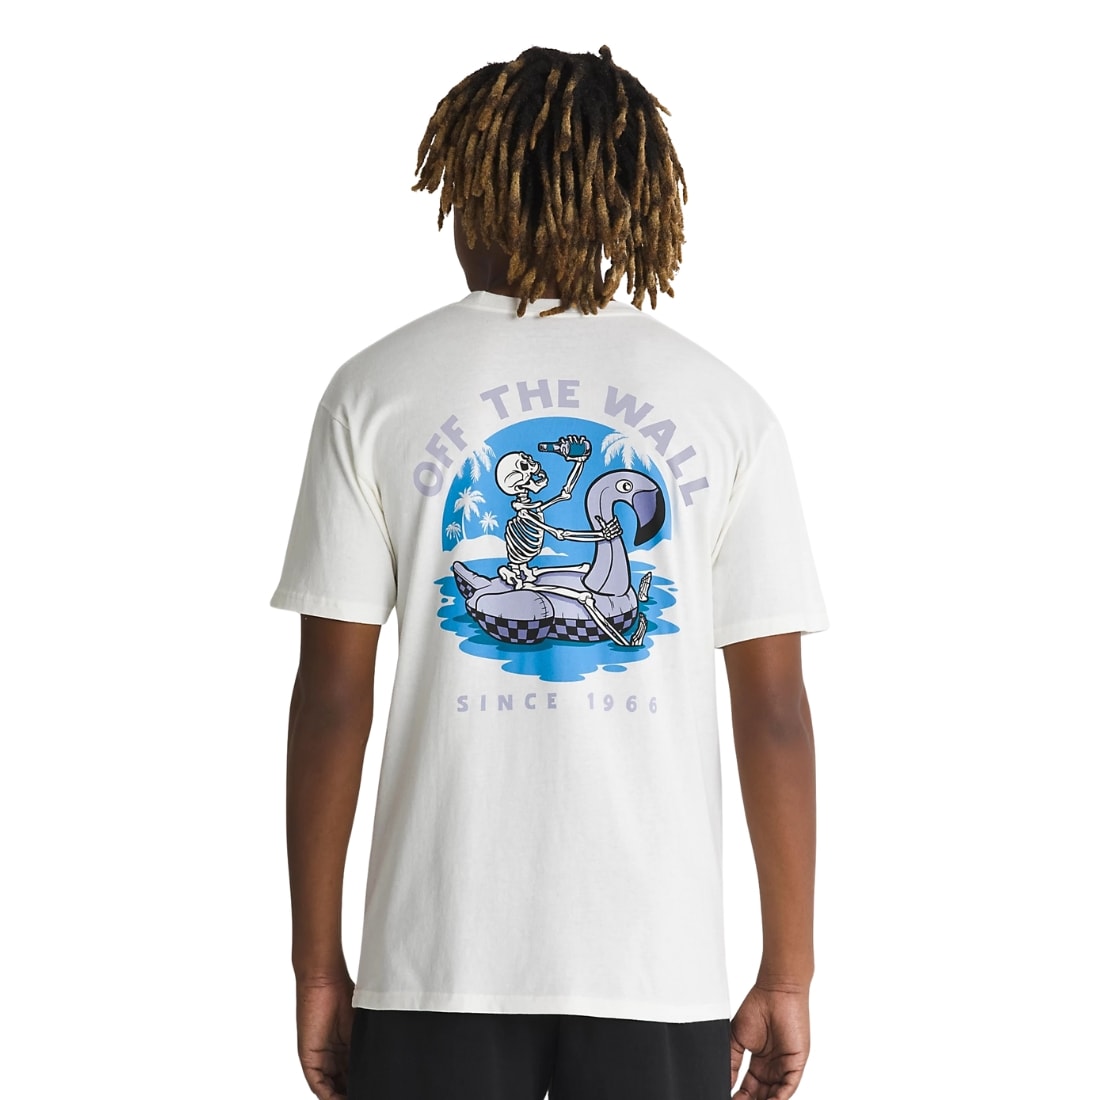 Vans Stay Cool T-Shirt - Marshmallow - Mens Skate Brand T-Shirt by Vans